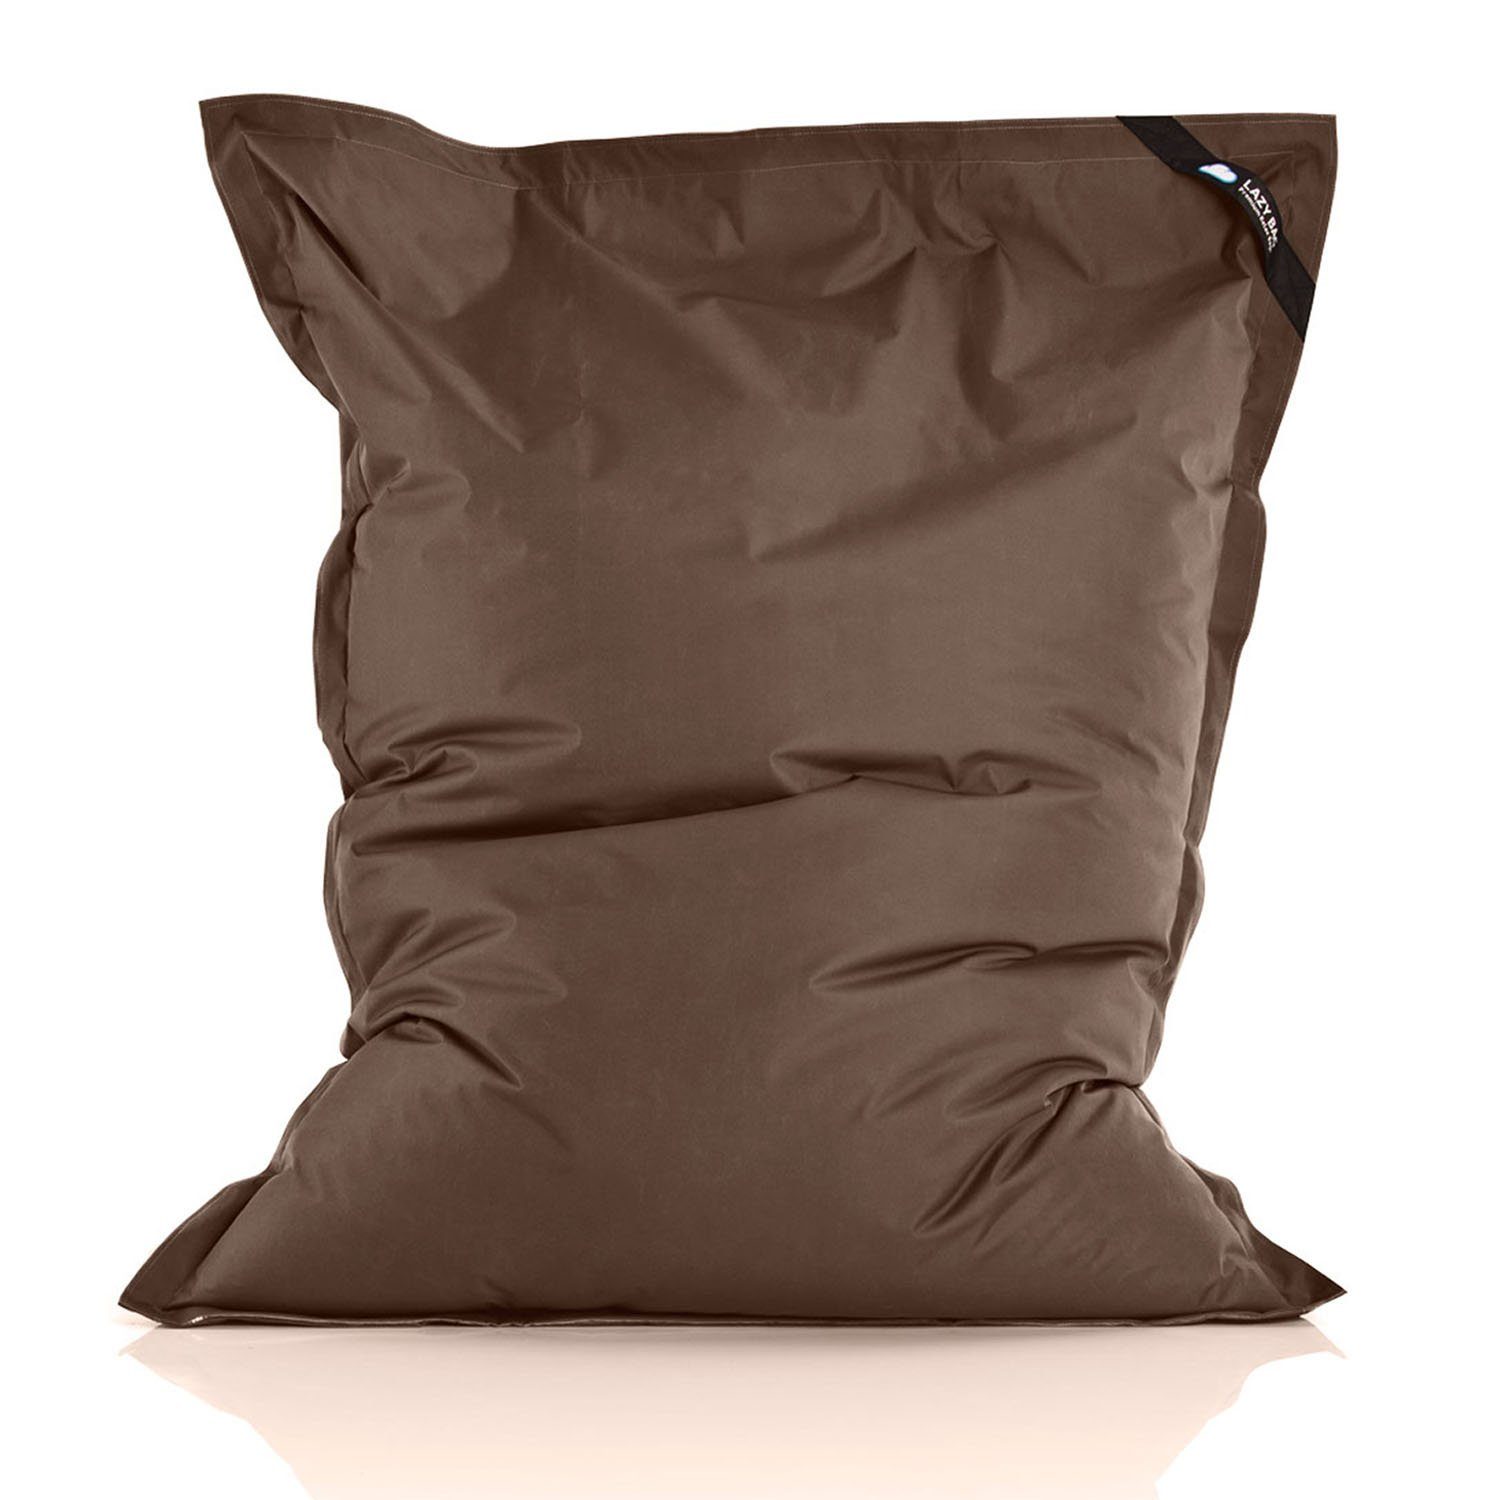 LazyBag Sitzsack Original Indoor & Outdoor Bean-Bag (XL 250 Liter, Riesensitzsack), Junior-Sitzkissen Sessel Braun